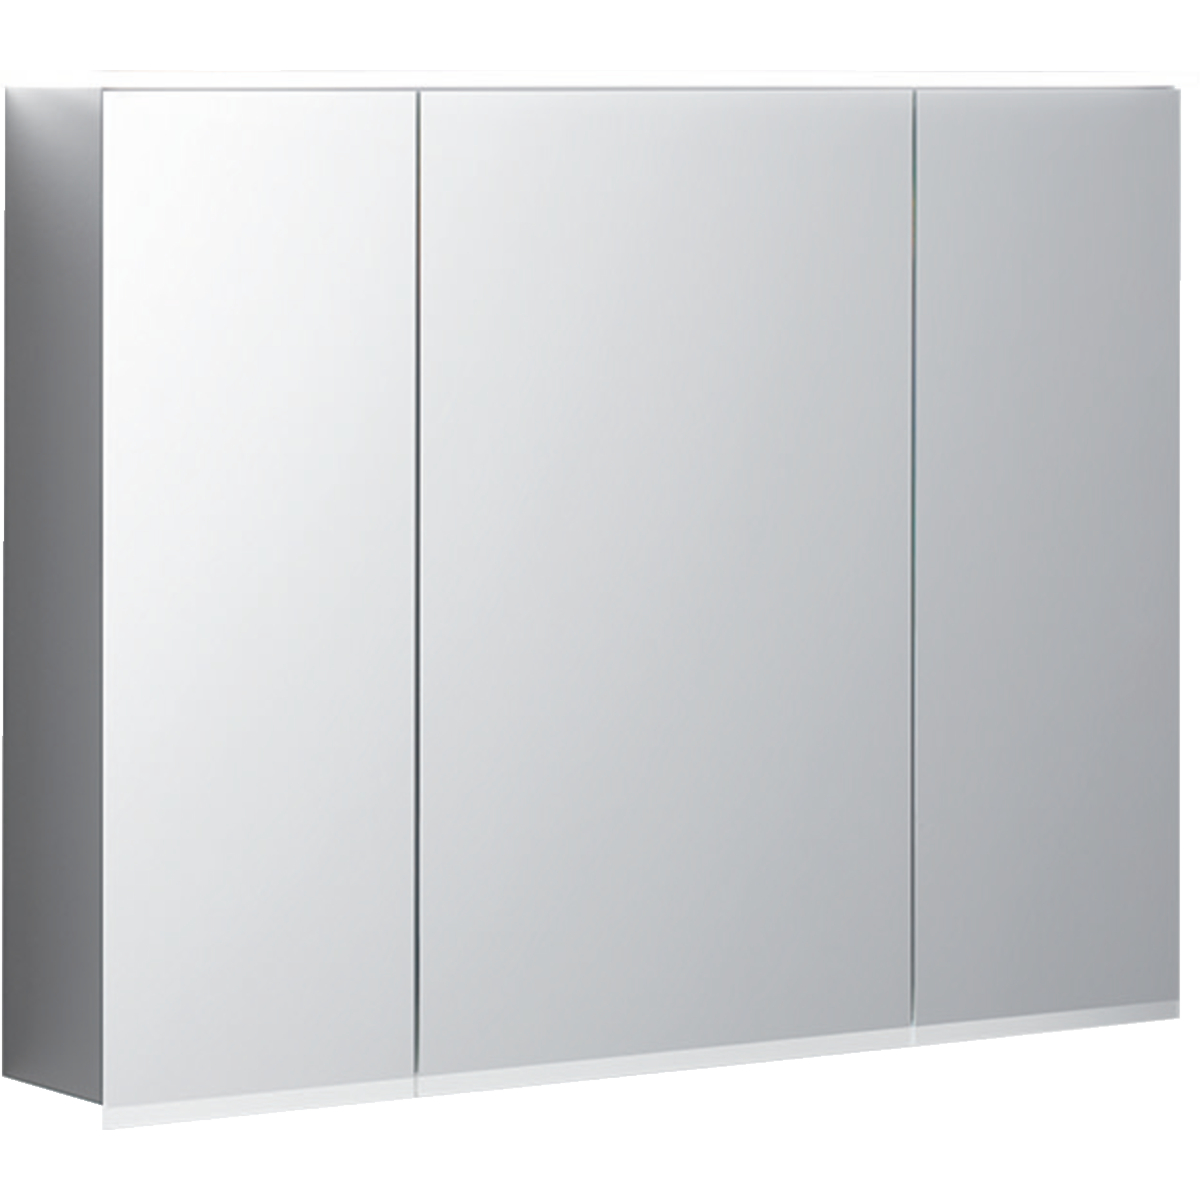 Option Plus Mirror Cabinet With Lighting 3 Doors - 900mm